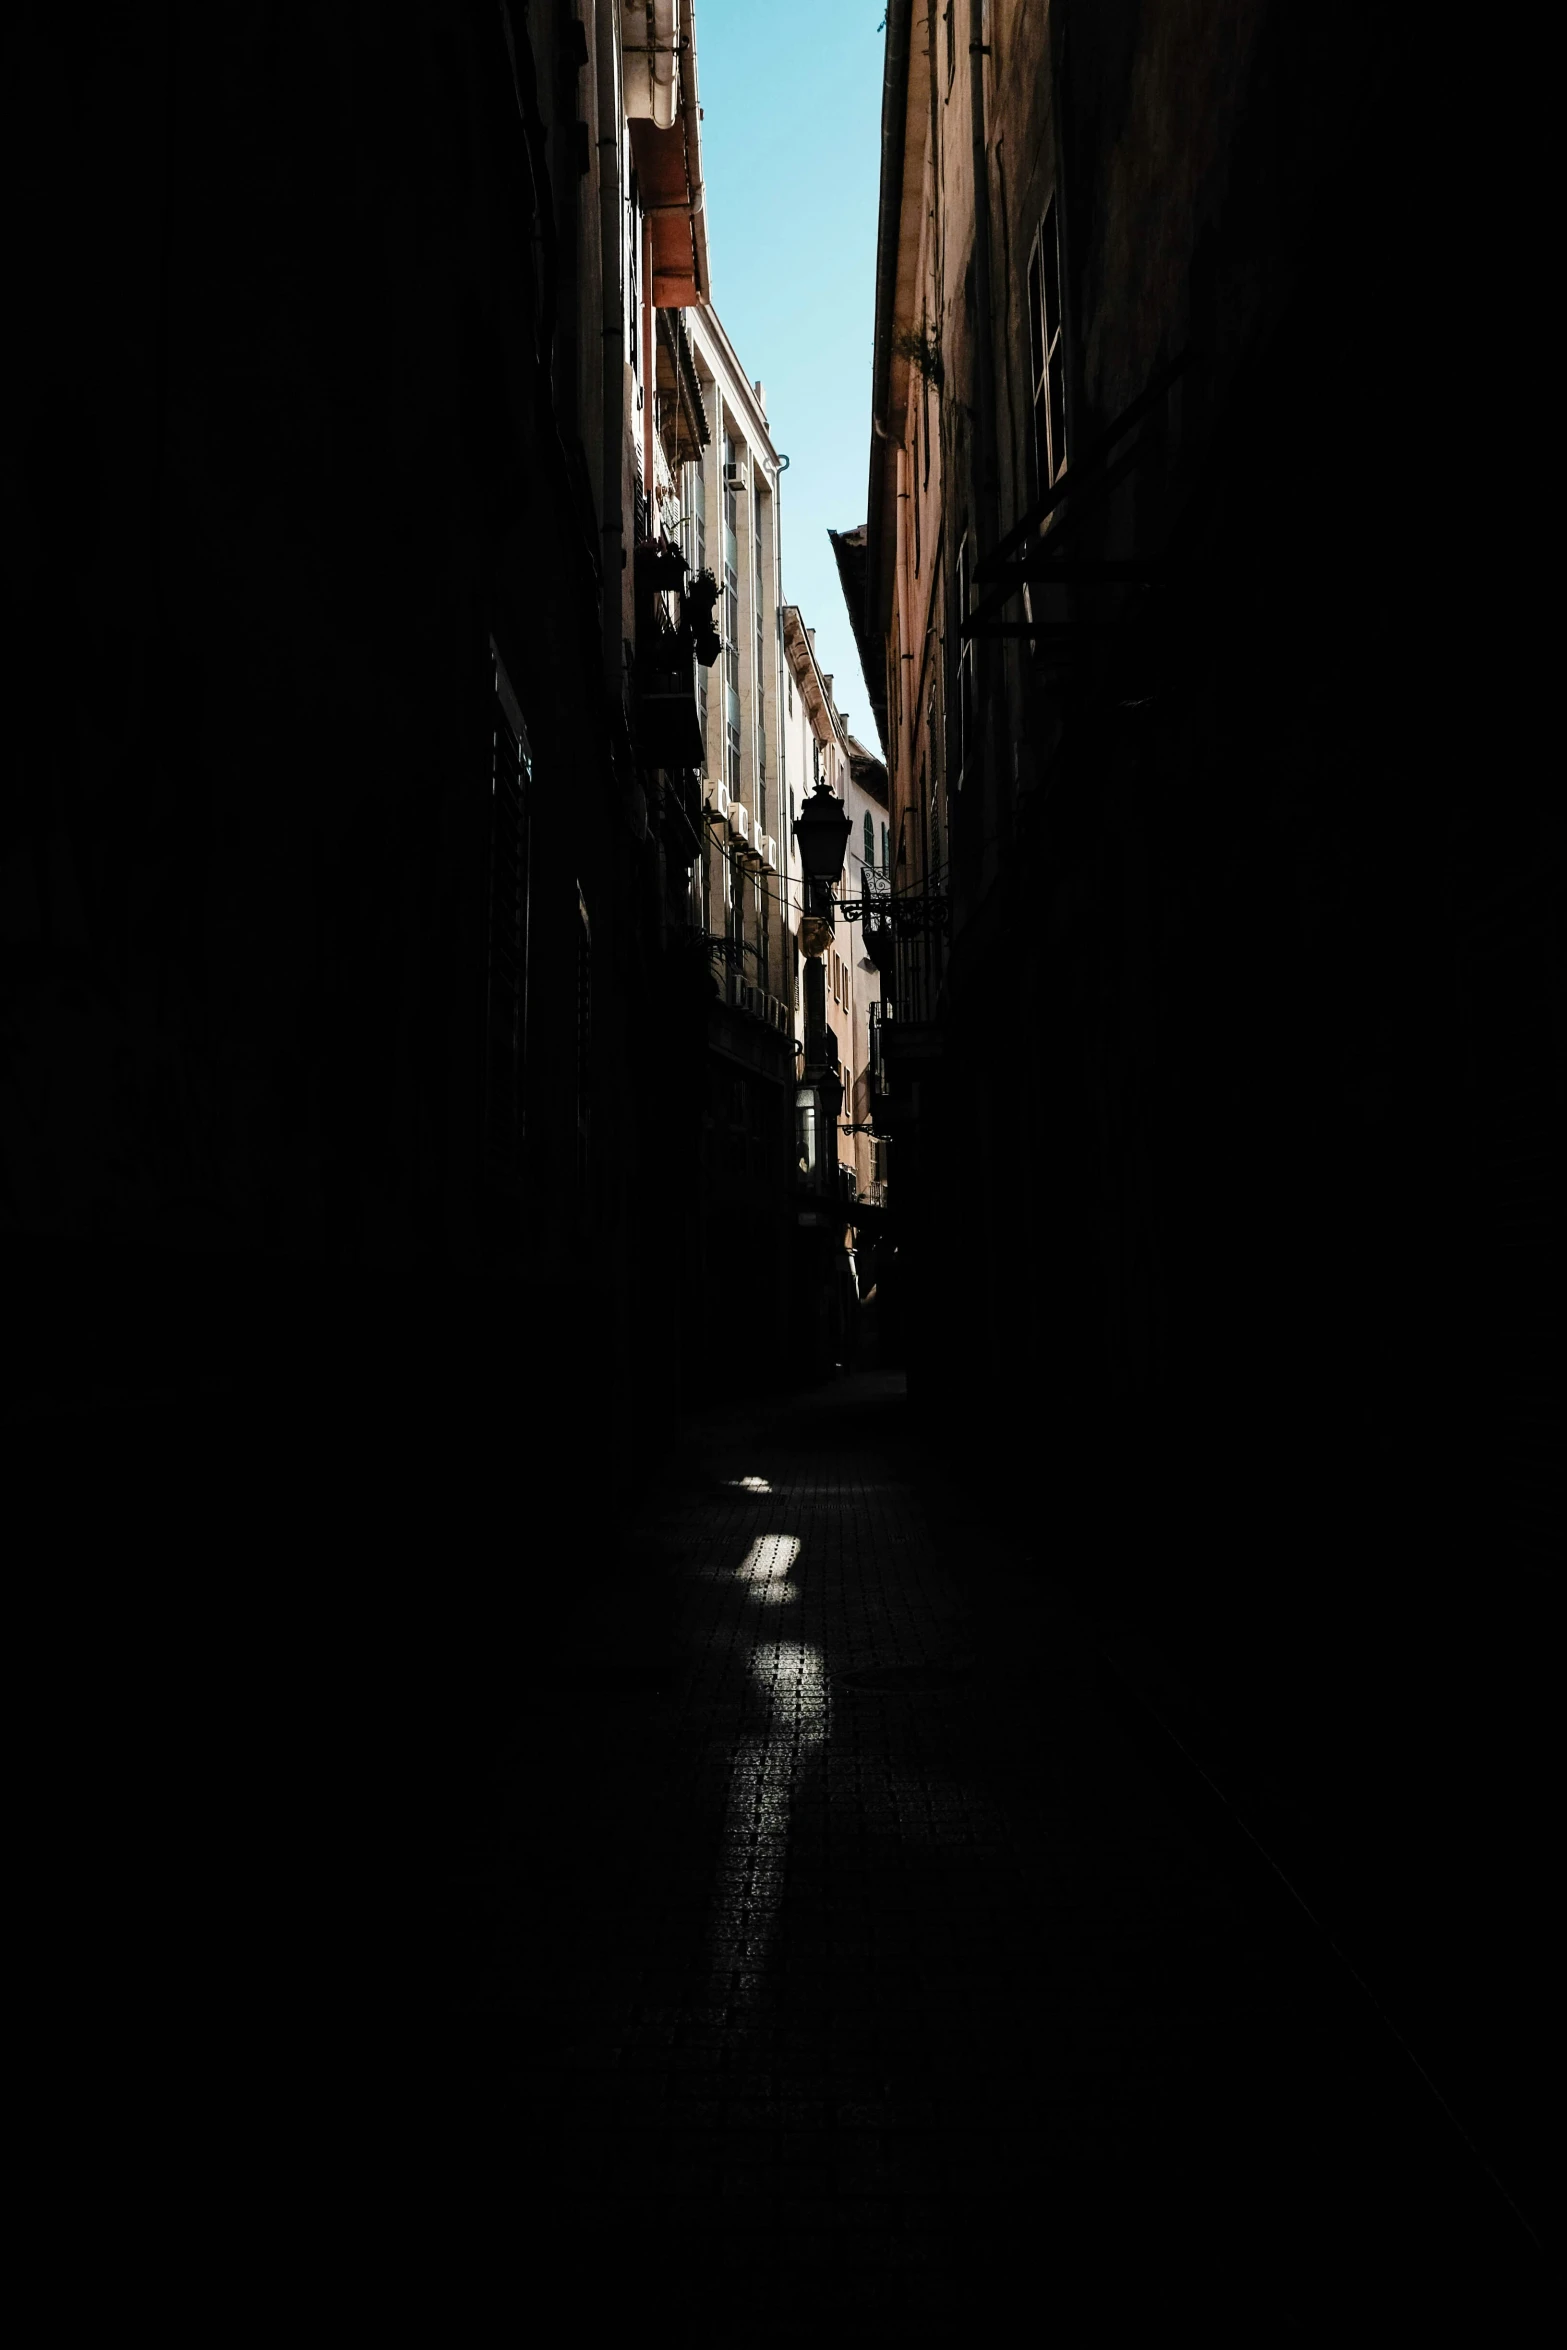 light shining on dark alley way with shadows